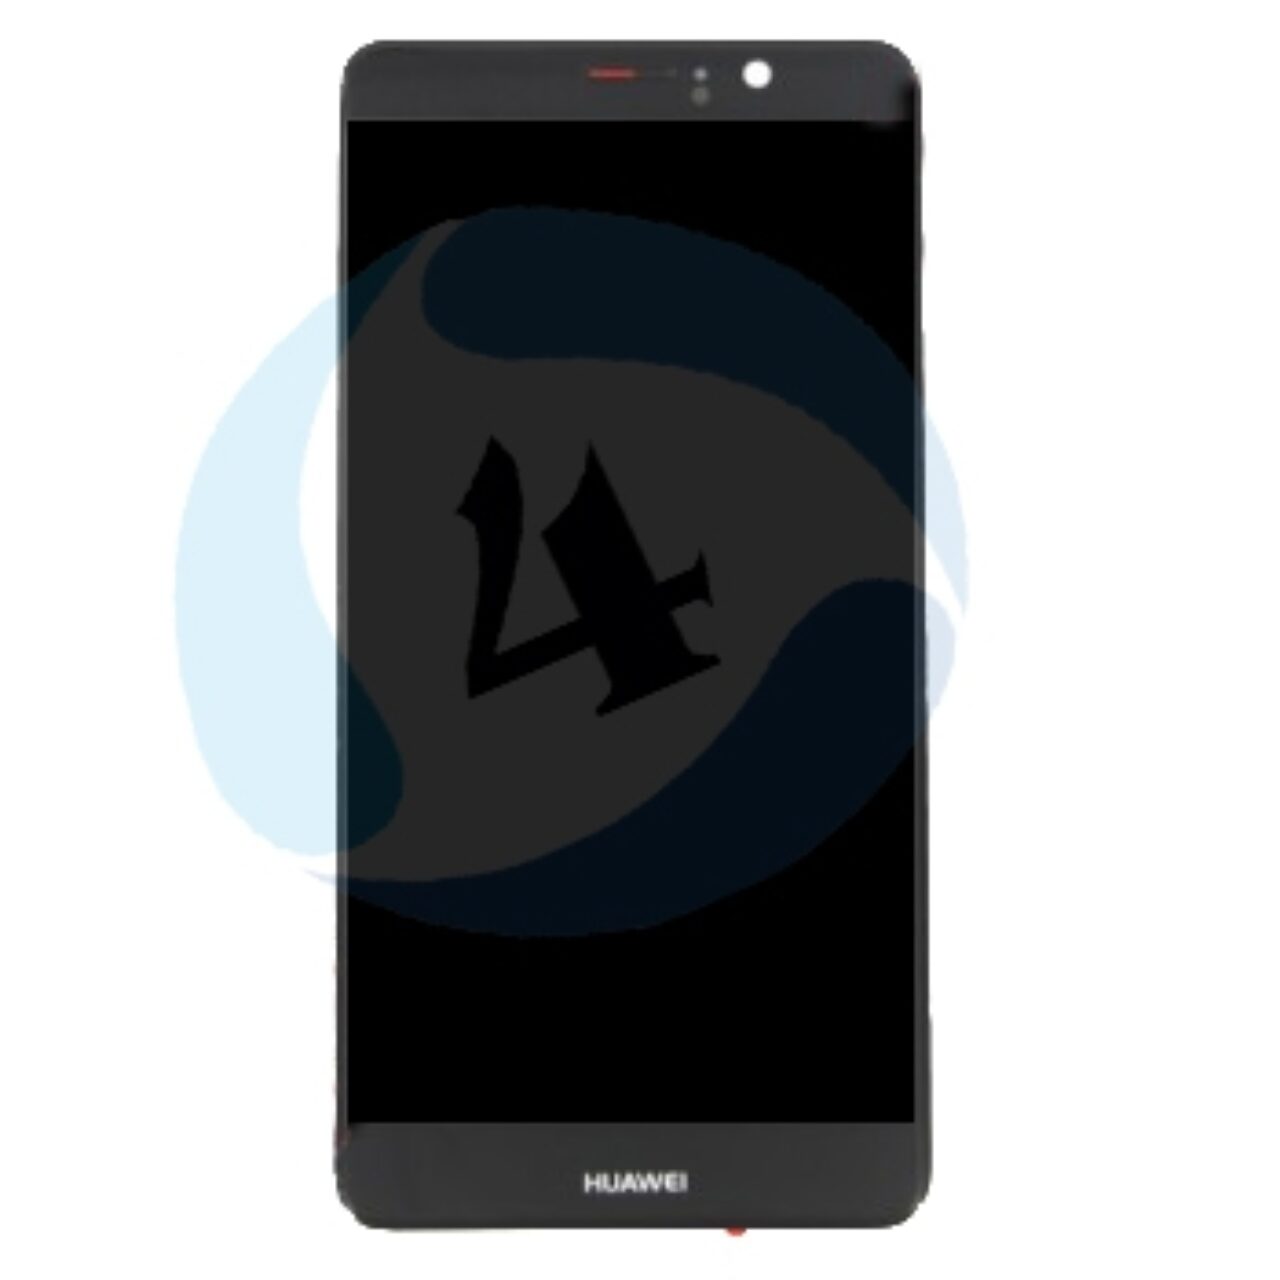 Huawei mate 9 lcdtouchframe black